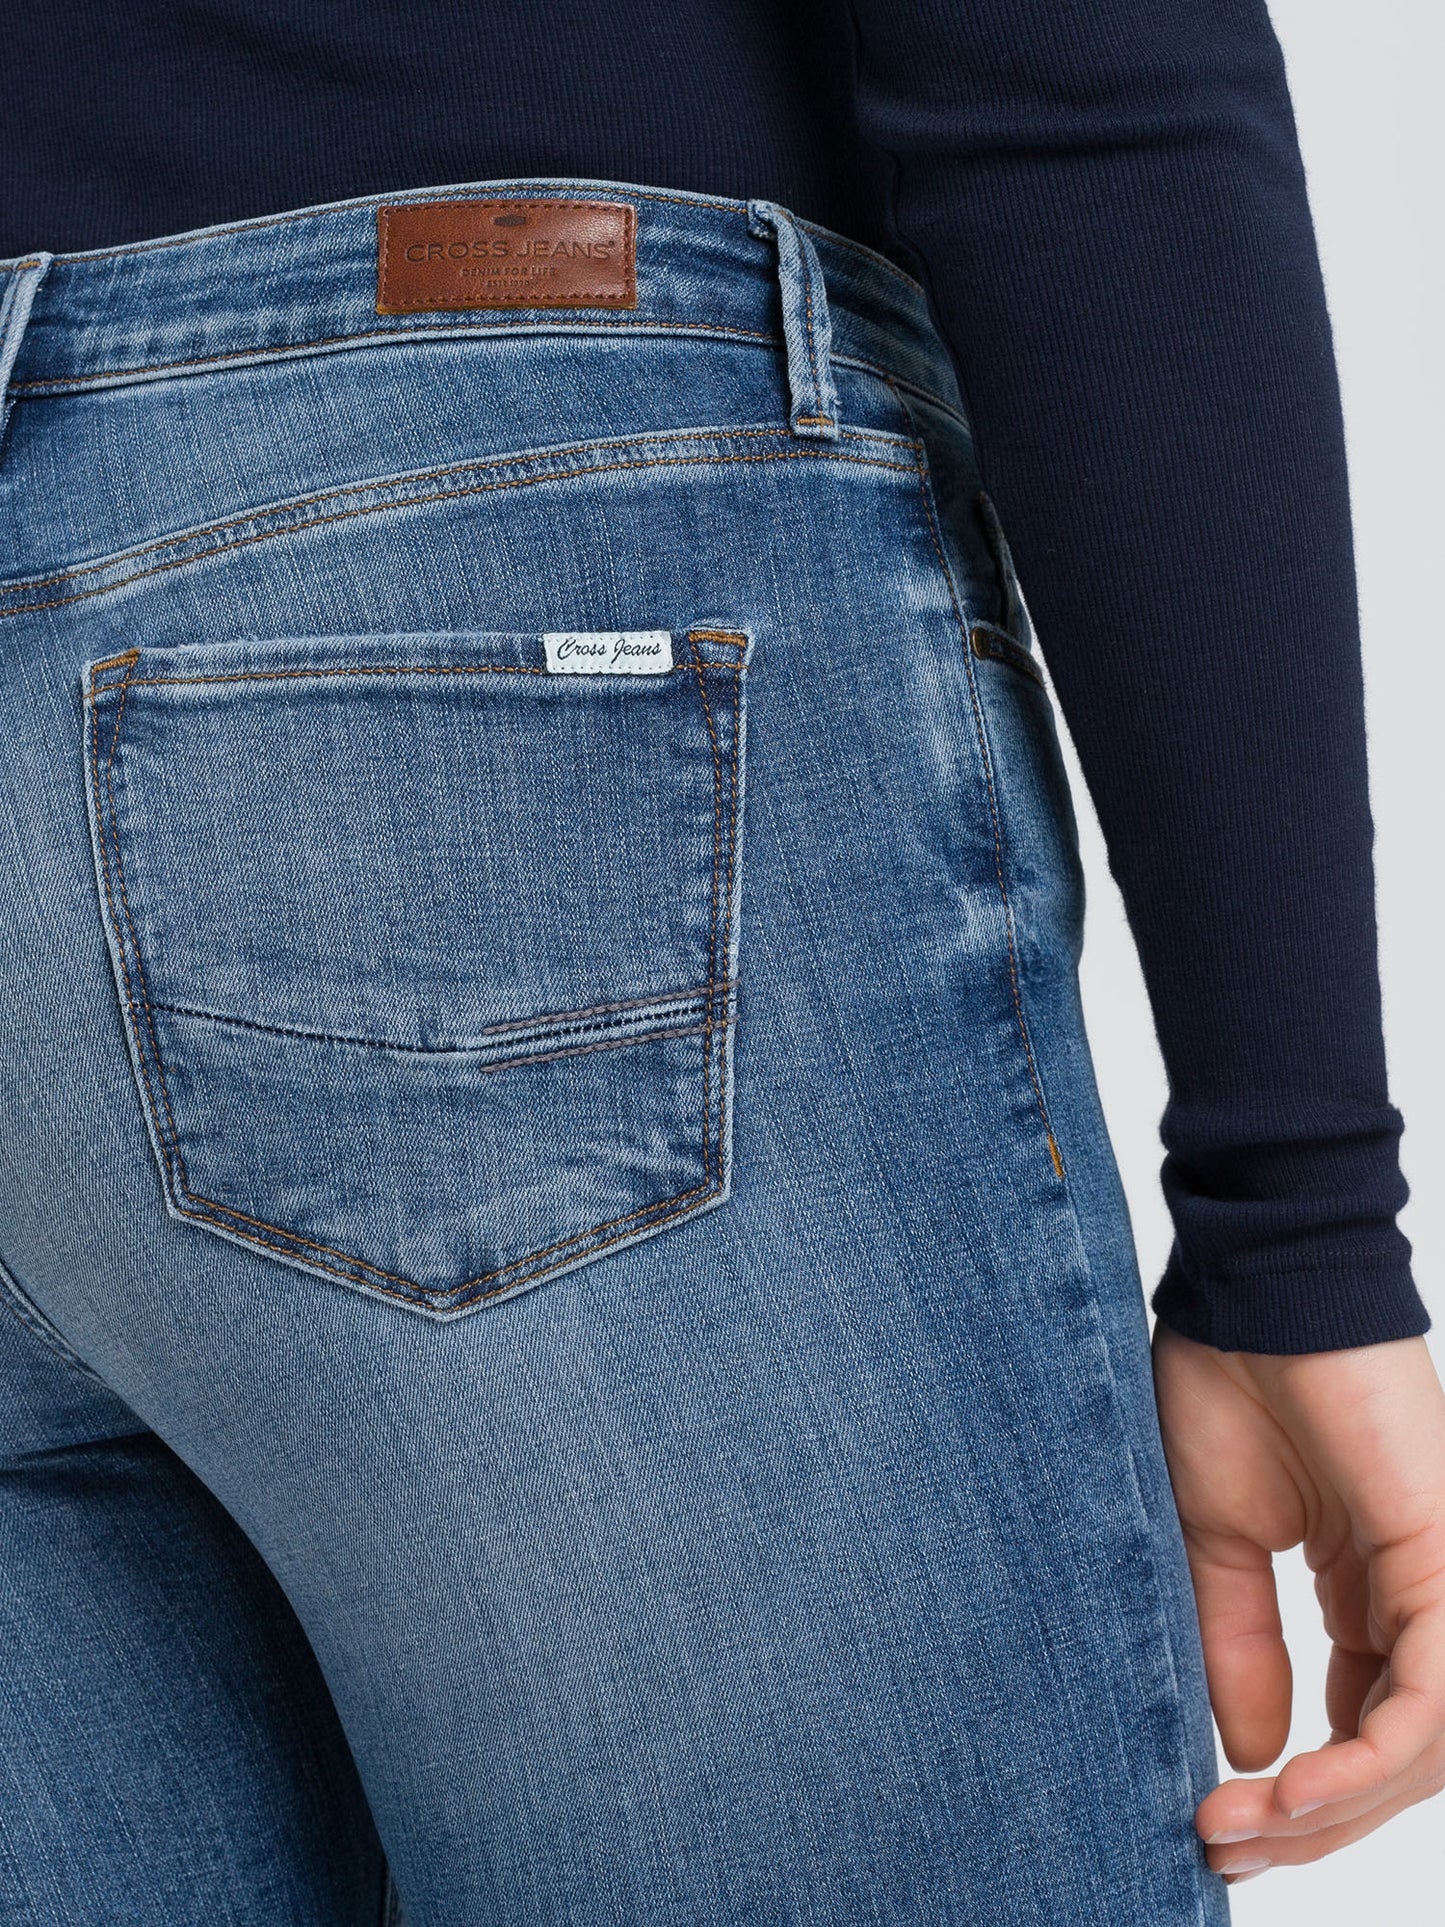 Alan women's jeans skinny fit high waist light blue